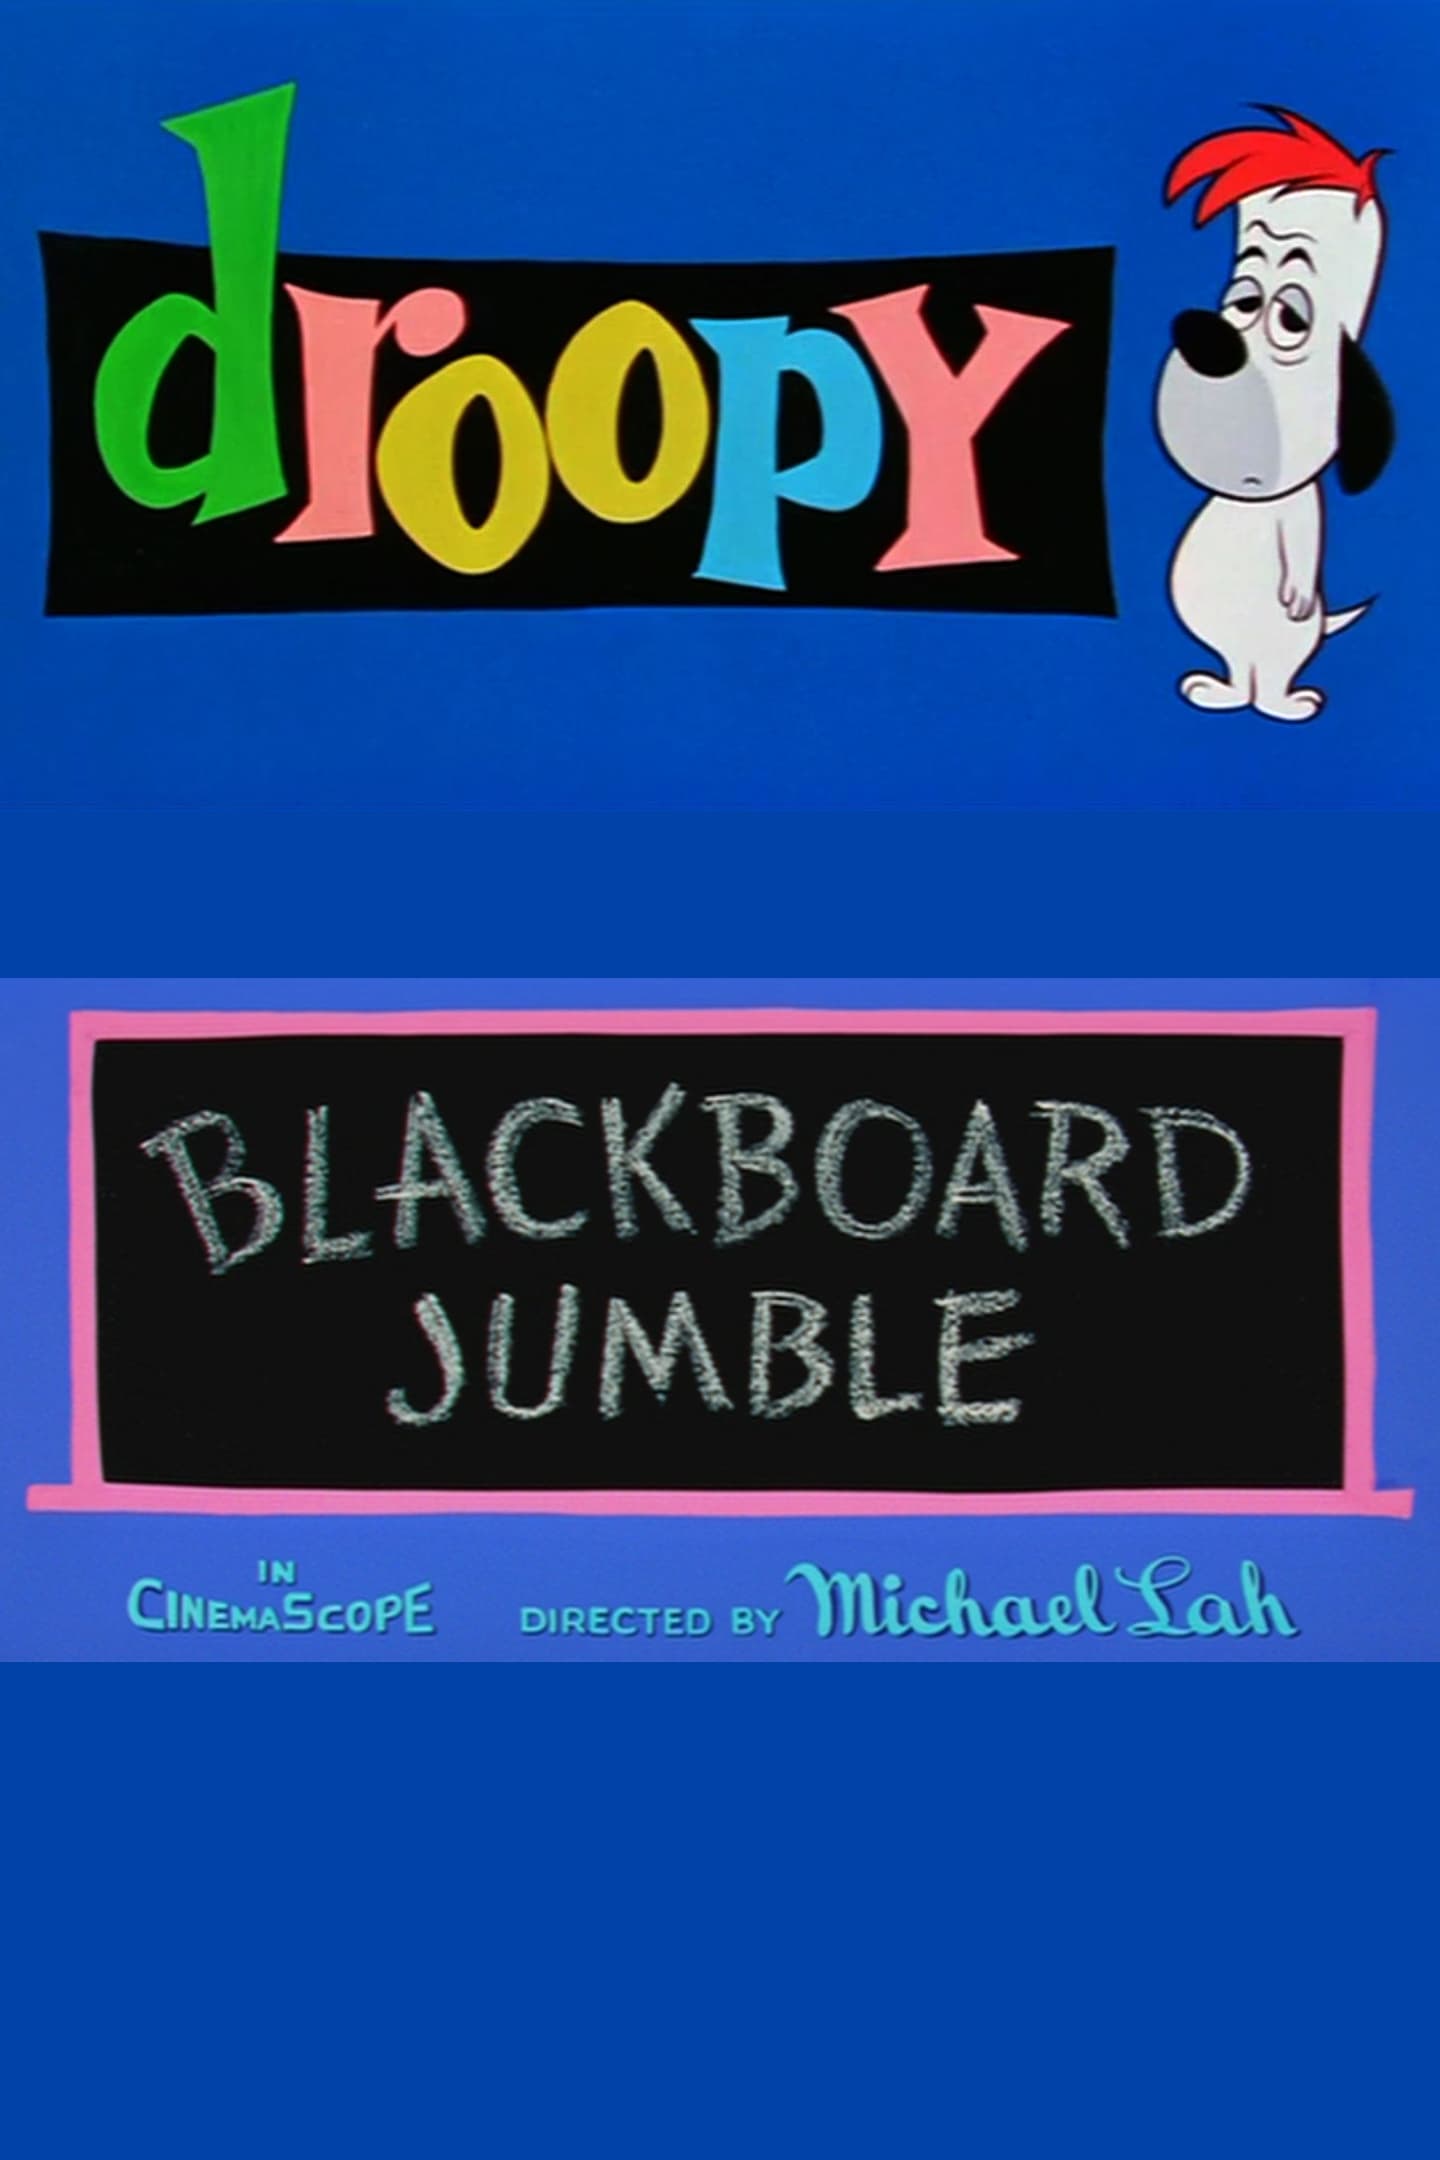 Blackboard Jumble